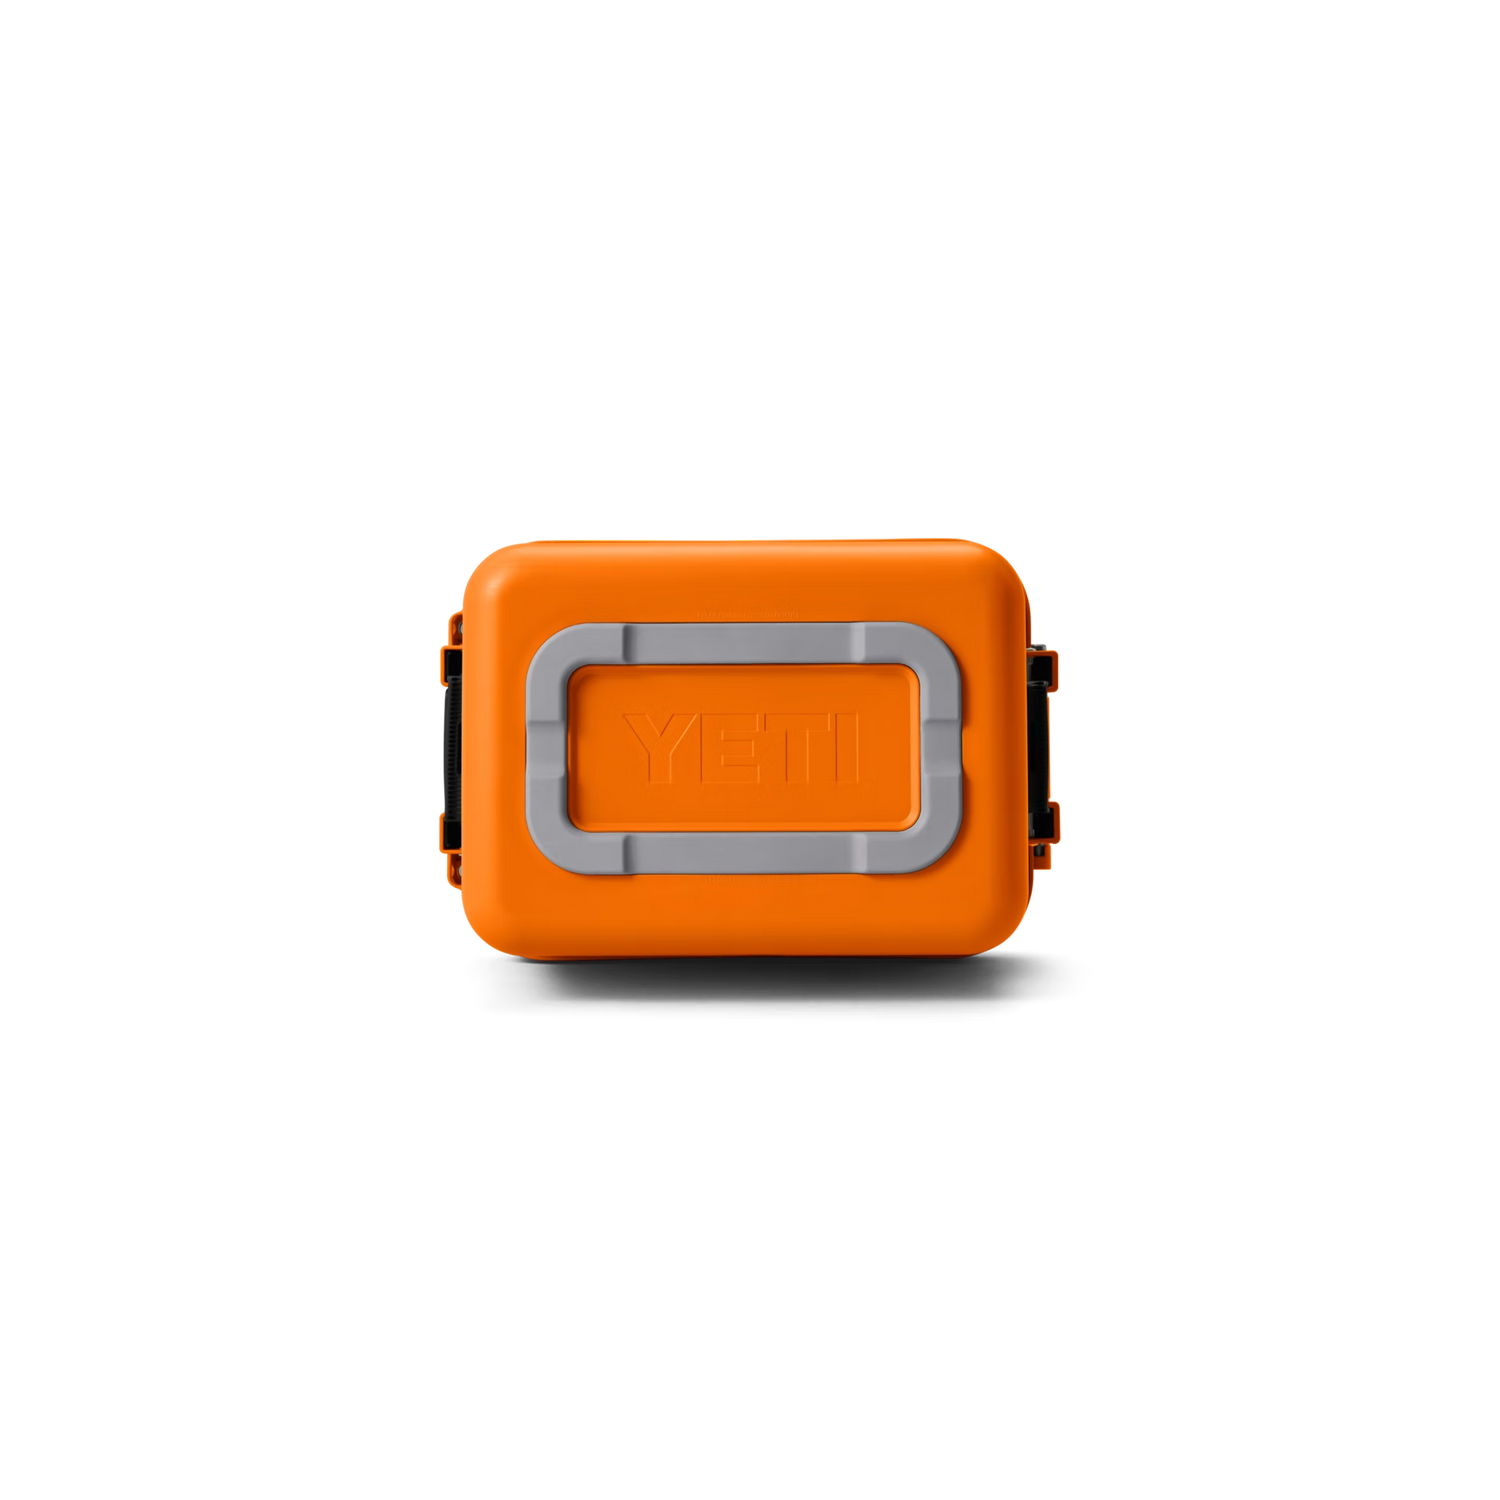 YETI LoadOut® GoBox 15-uitrustingsbox King Crab